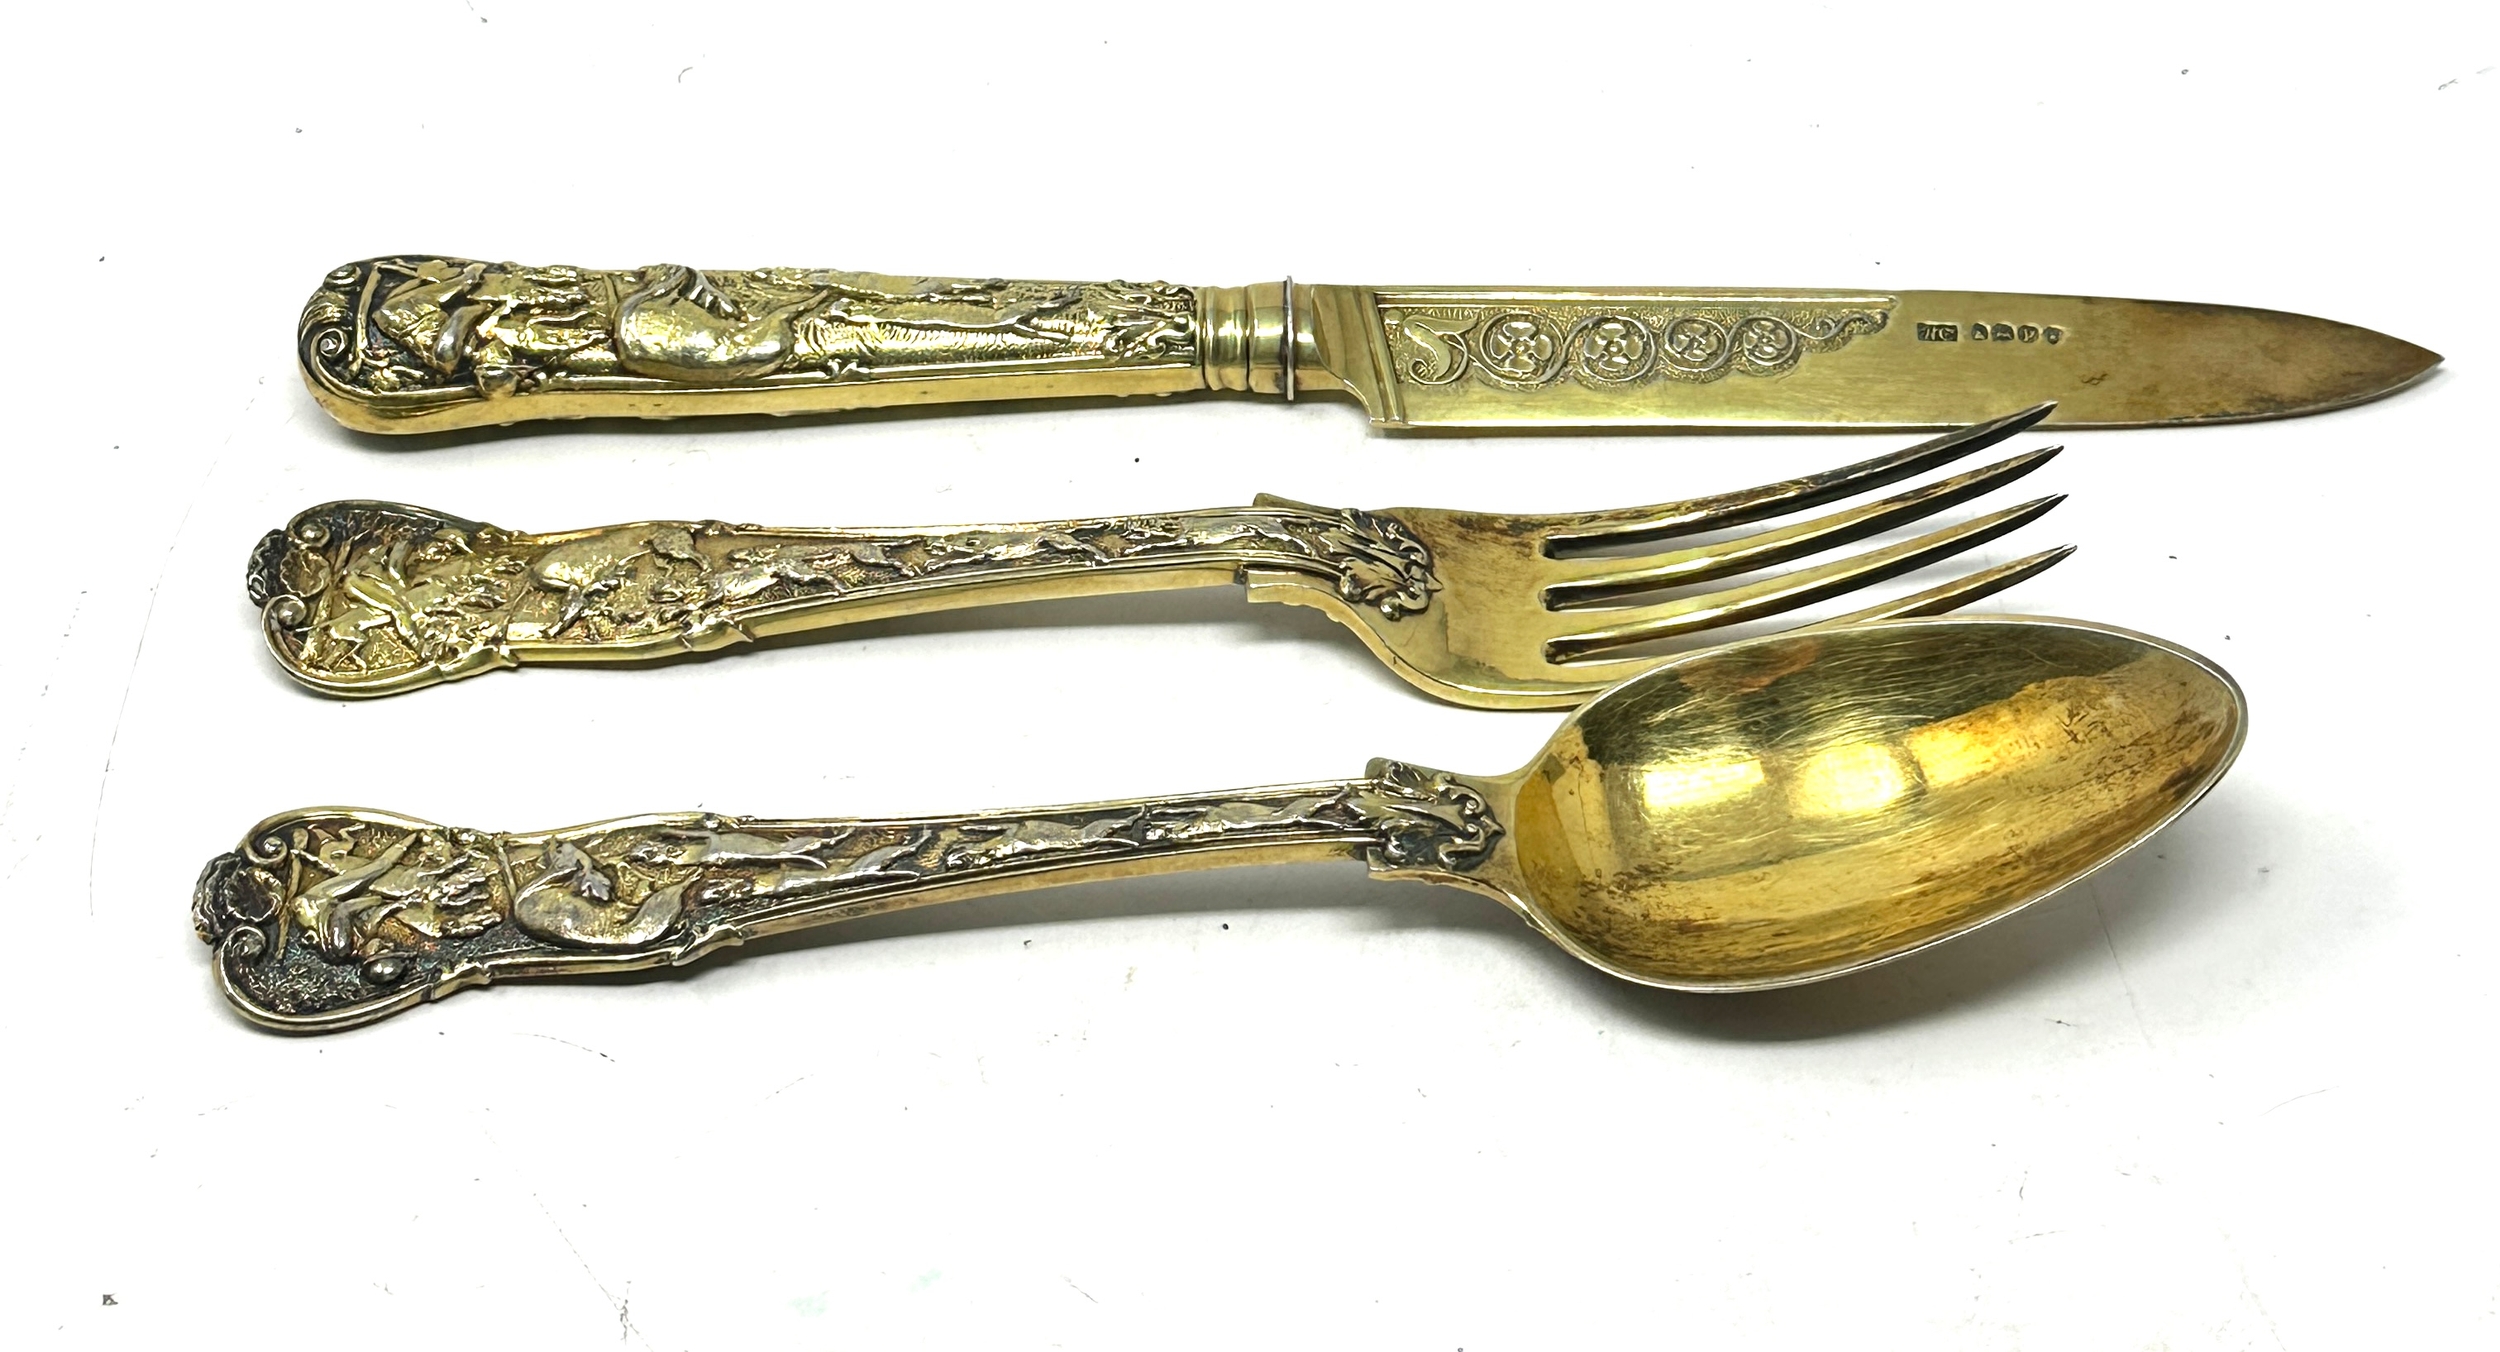 Antique georgian silver ornate embossed knife fork & spoon London silver hallmarks - Image 2 of 4